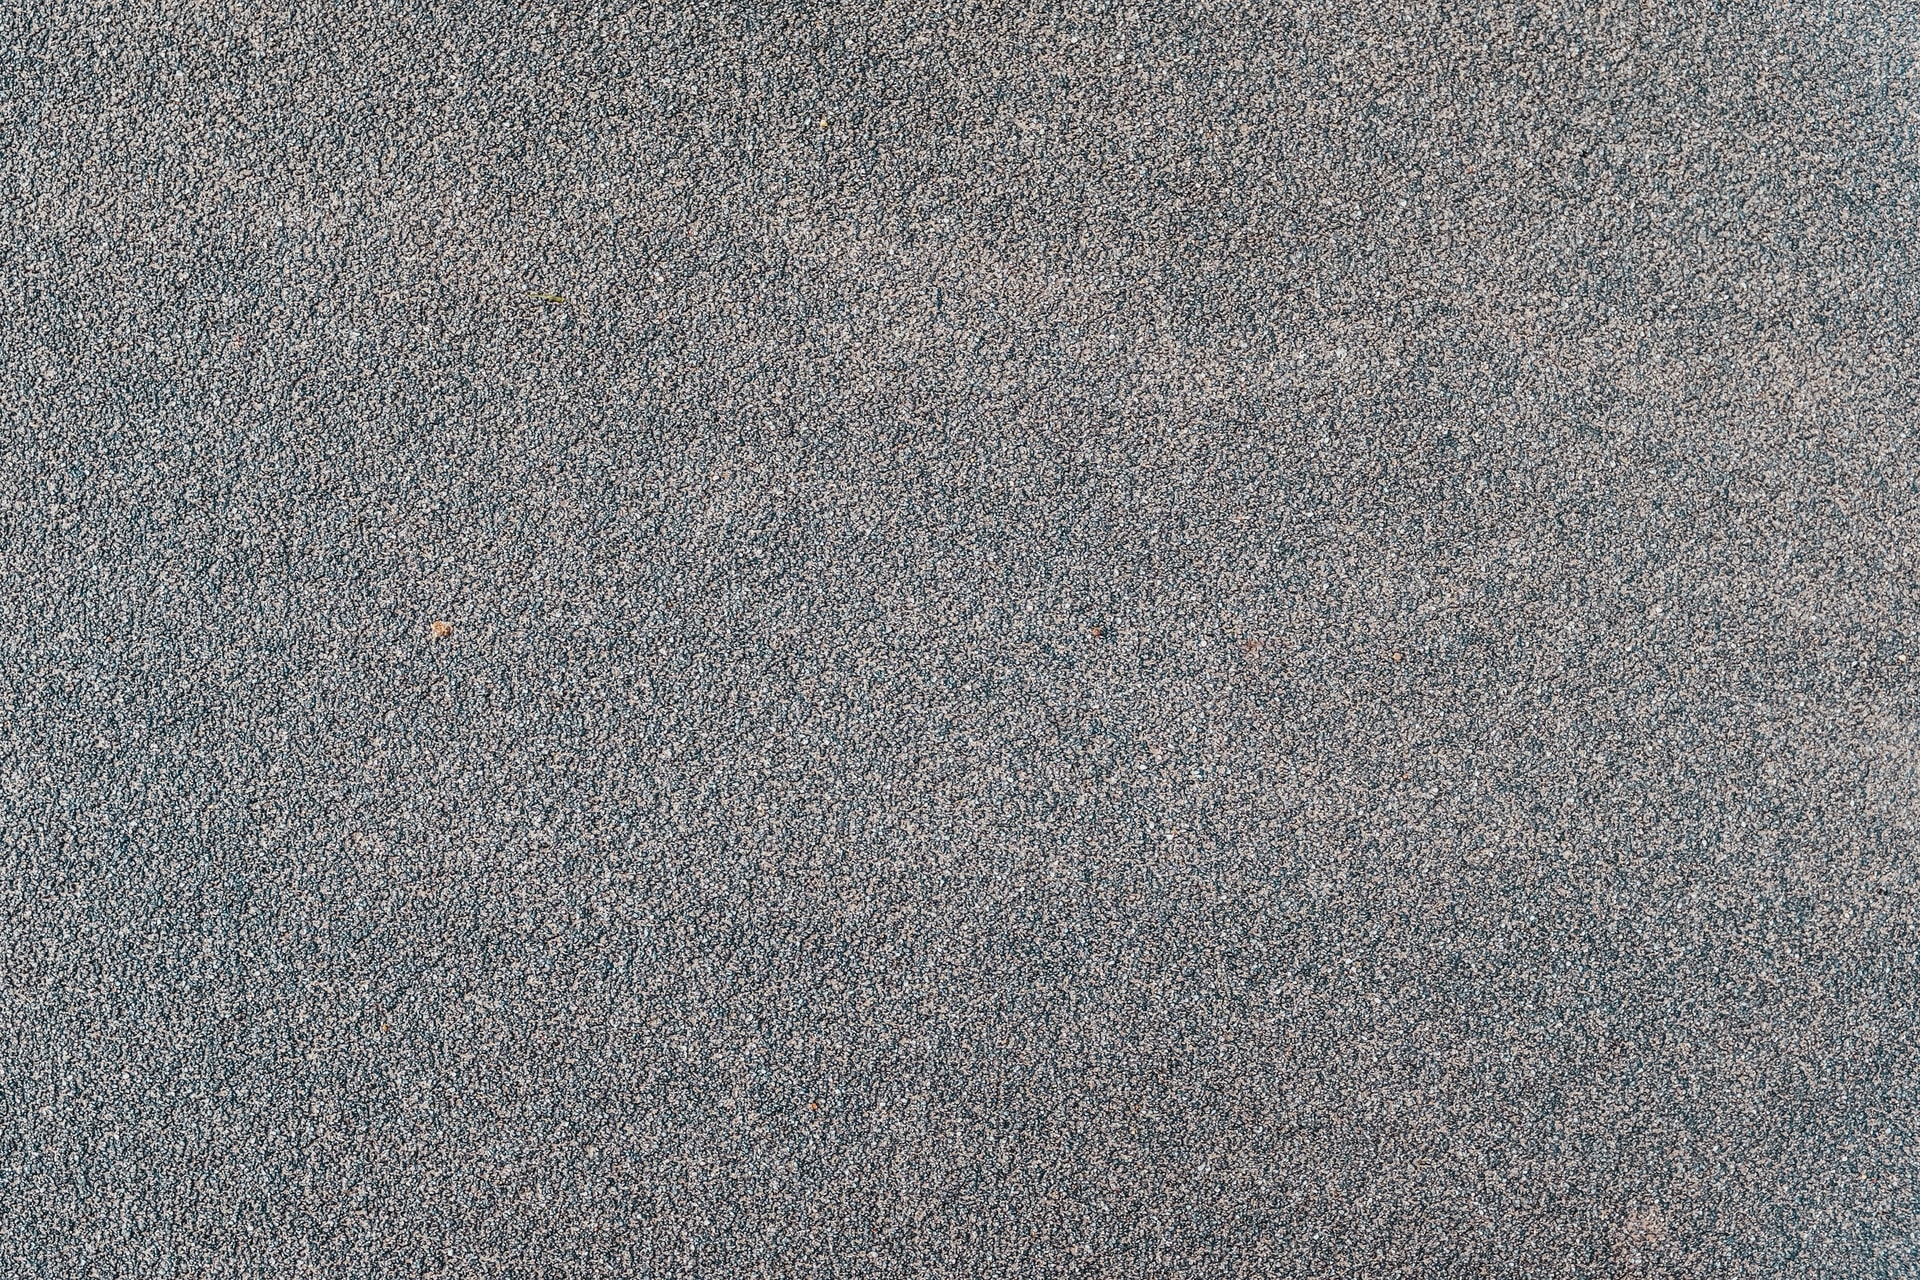 A close up of a grey fibred carpet